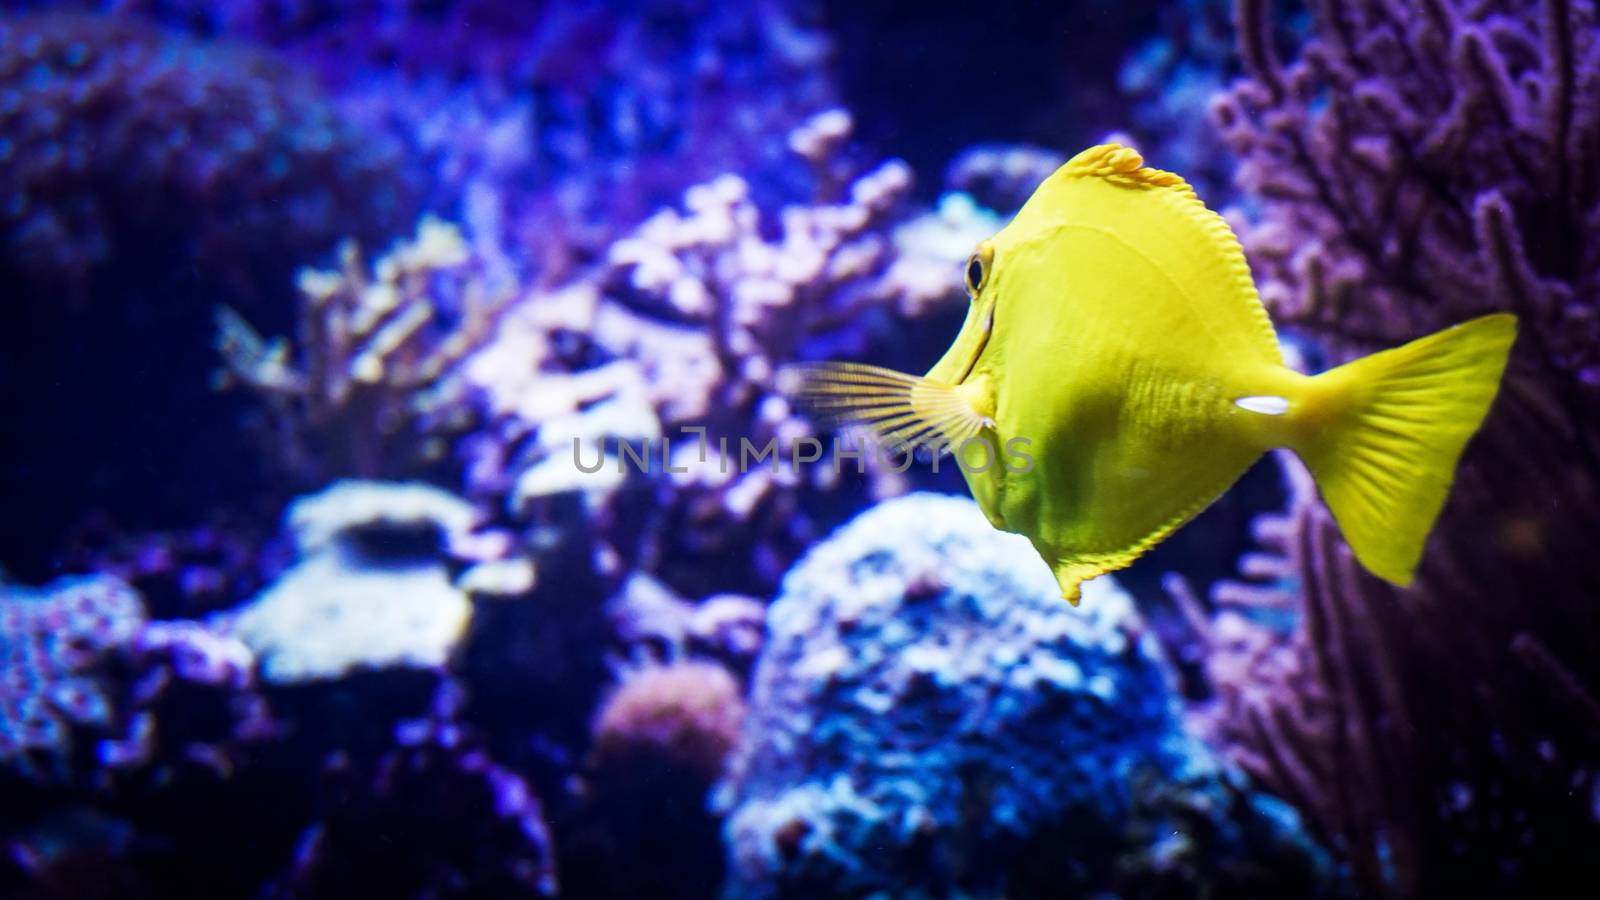 Image of zebrasoma yellow tang fish in aquarium by natali_brill